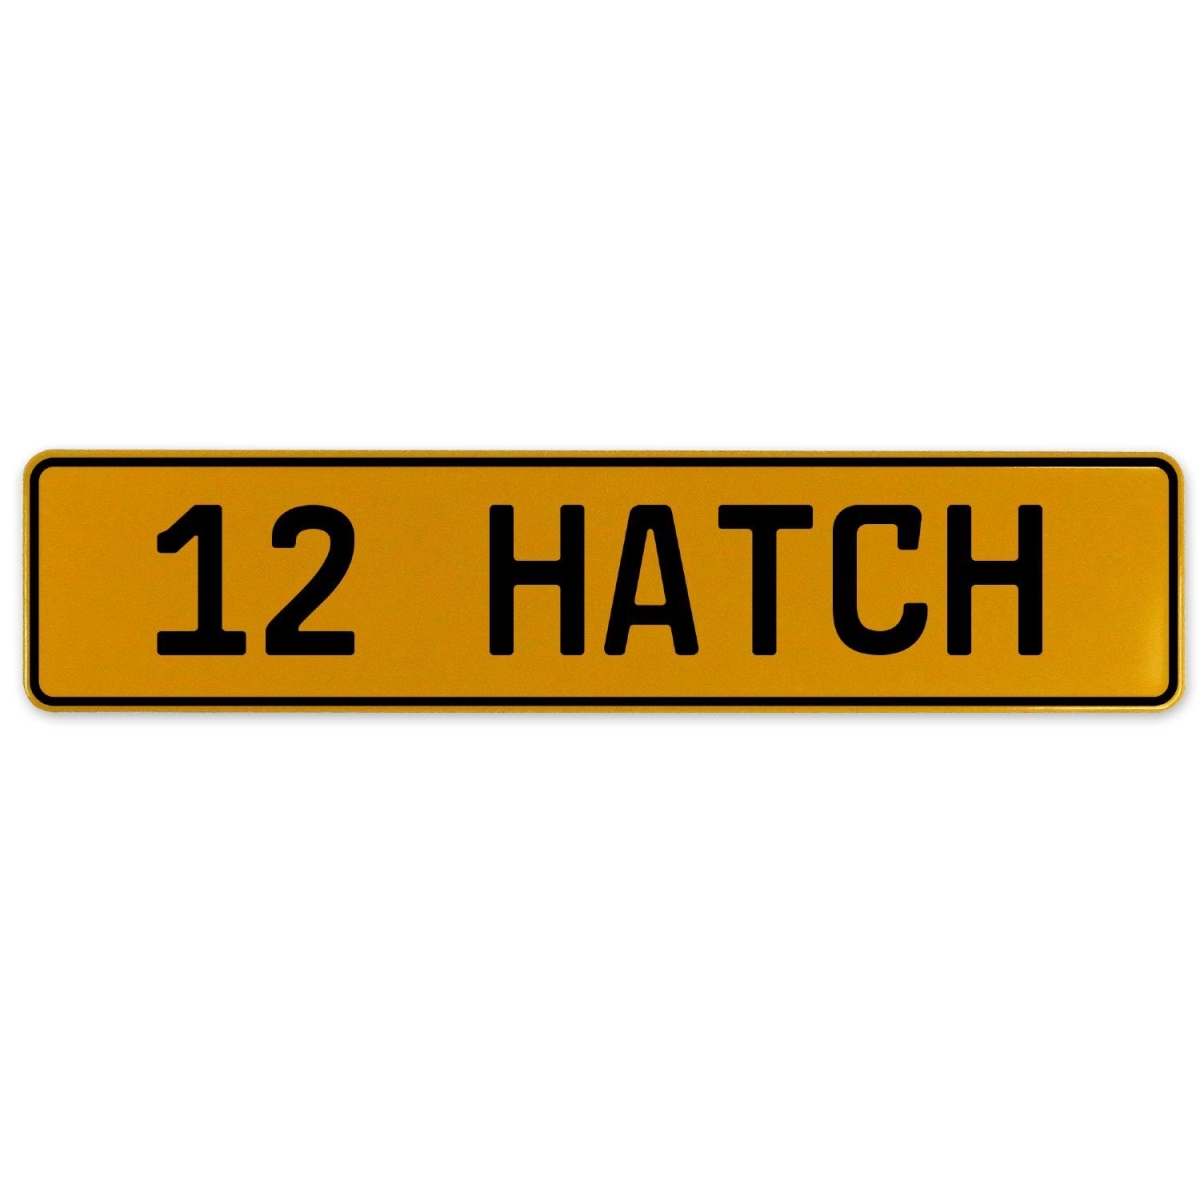 12 Hatch - Yellow Aluminum Street Sign Mancave Euro Plate Name Door Sign Wall